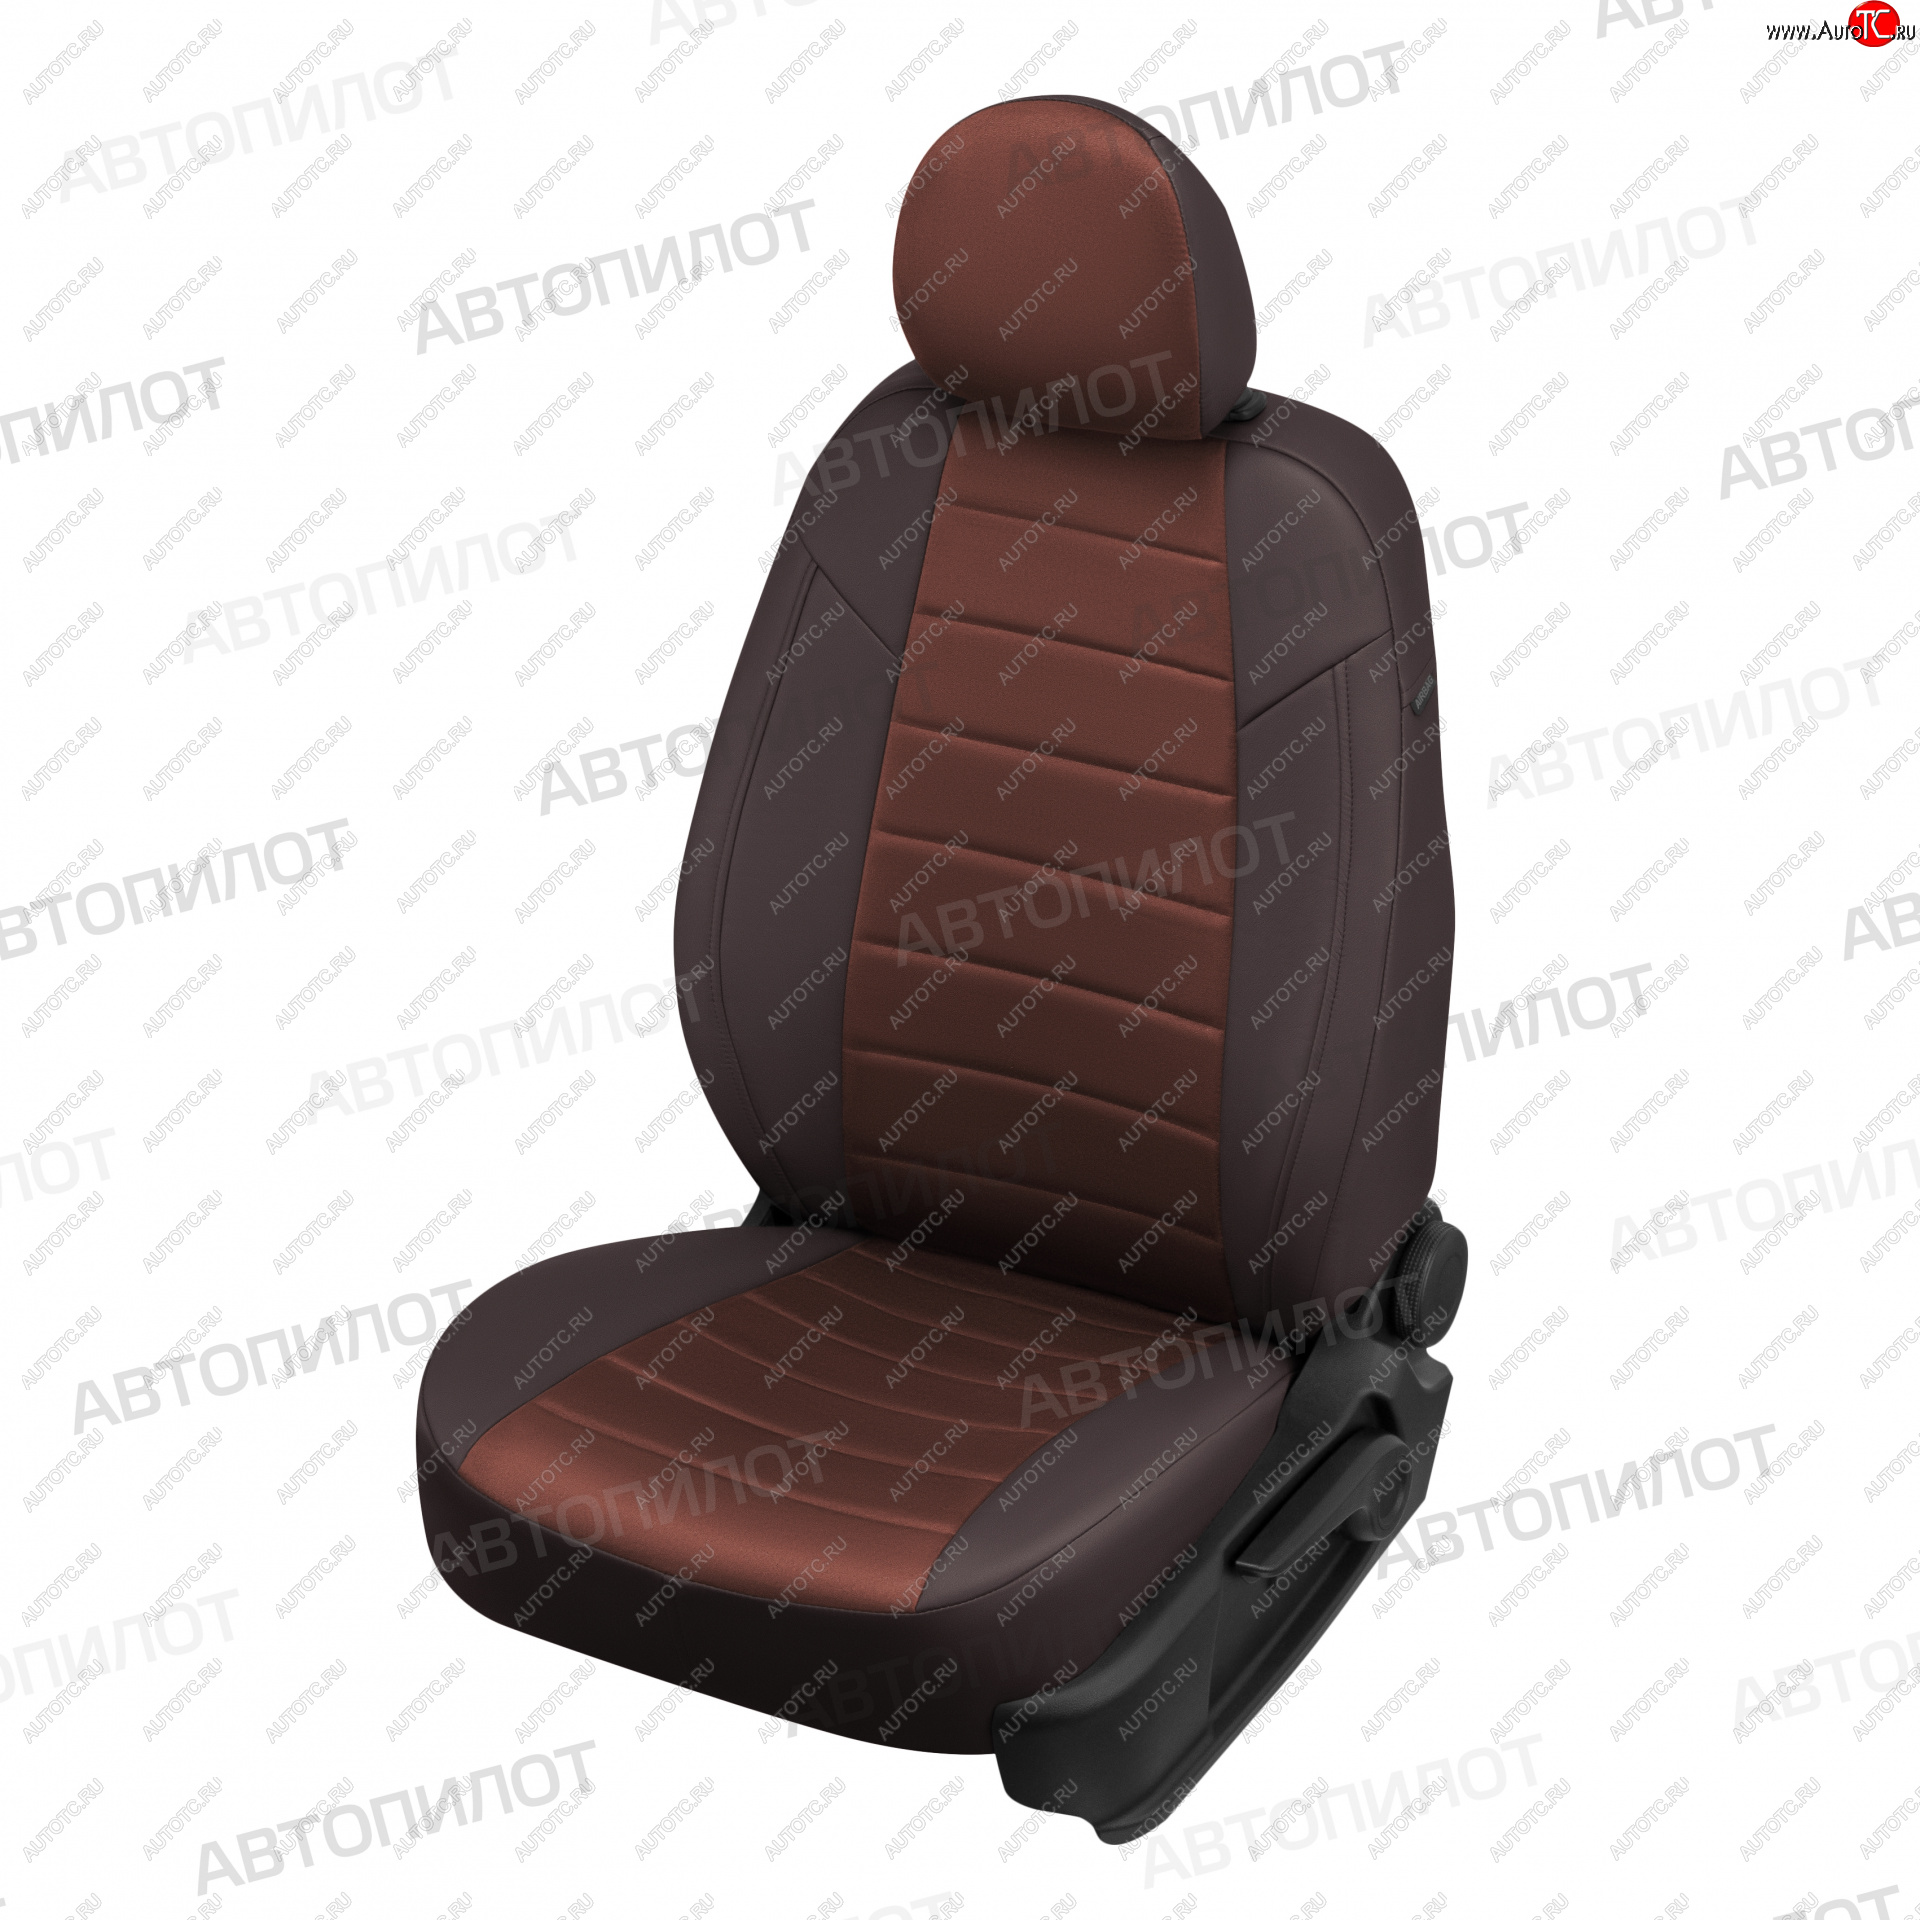 13 449 р. Чехлы сидений (экокожа/алькантара, S-Line) Автопилот  Audi Q5  8R (2008-2017) (шоколад)